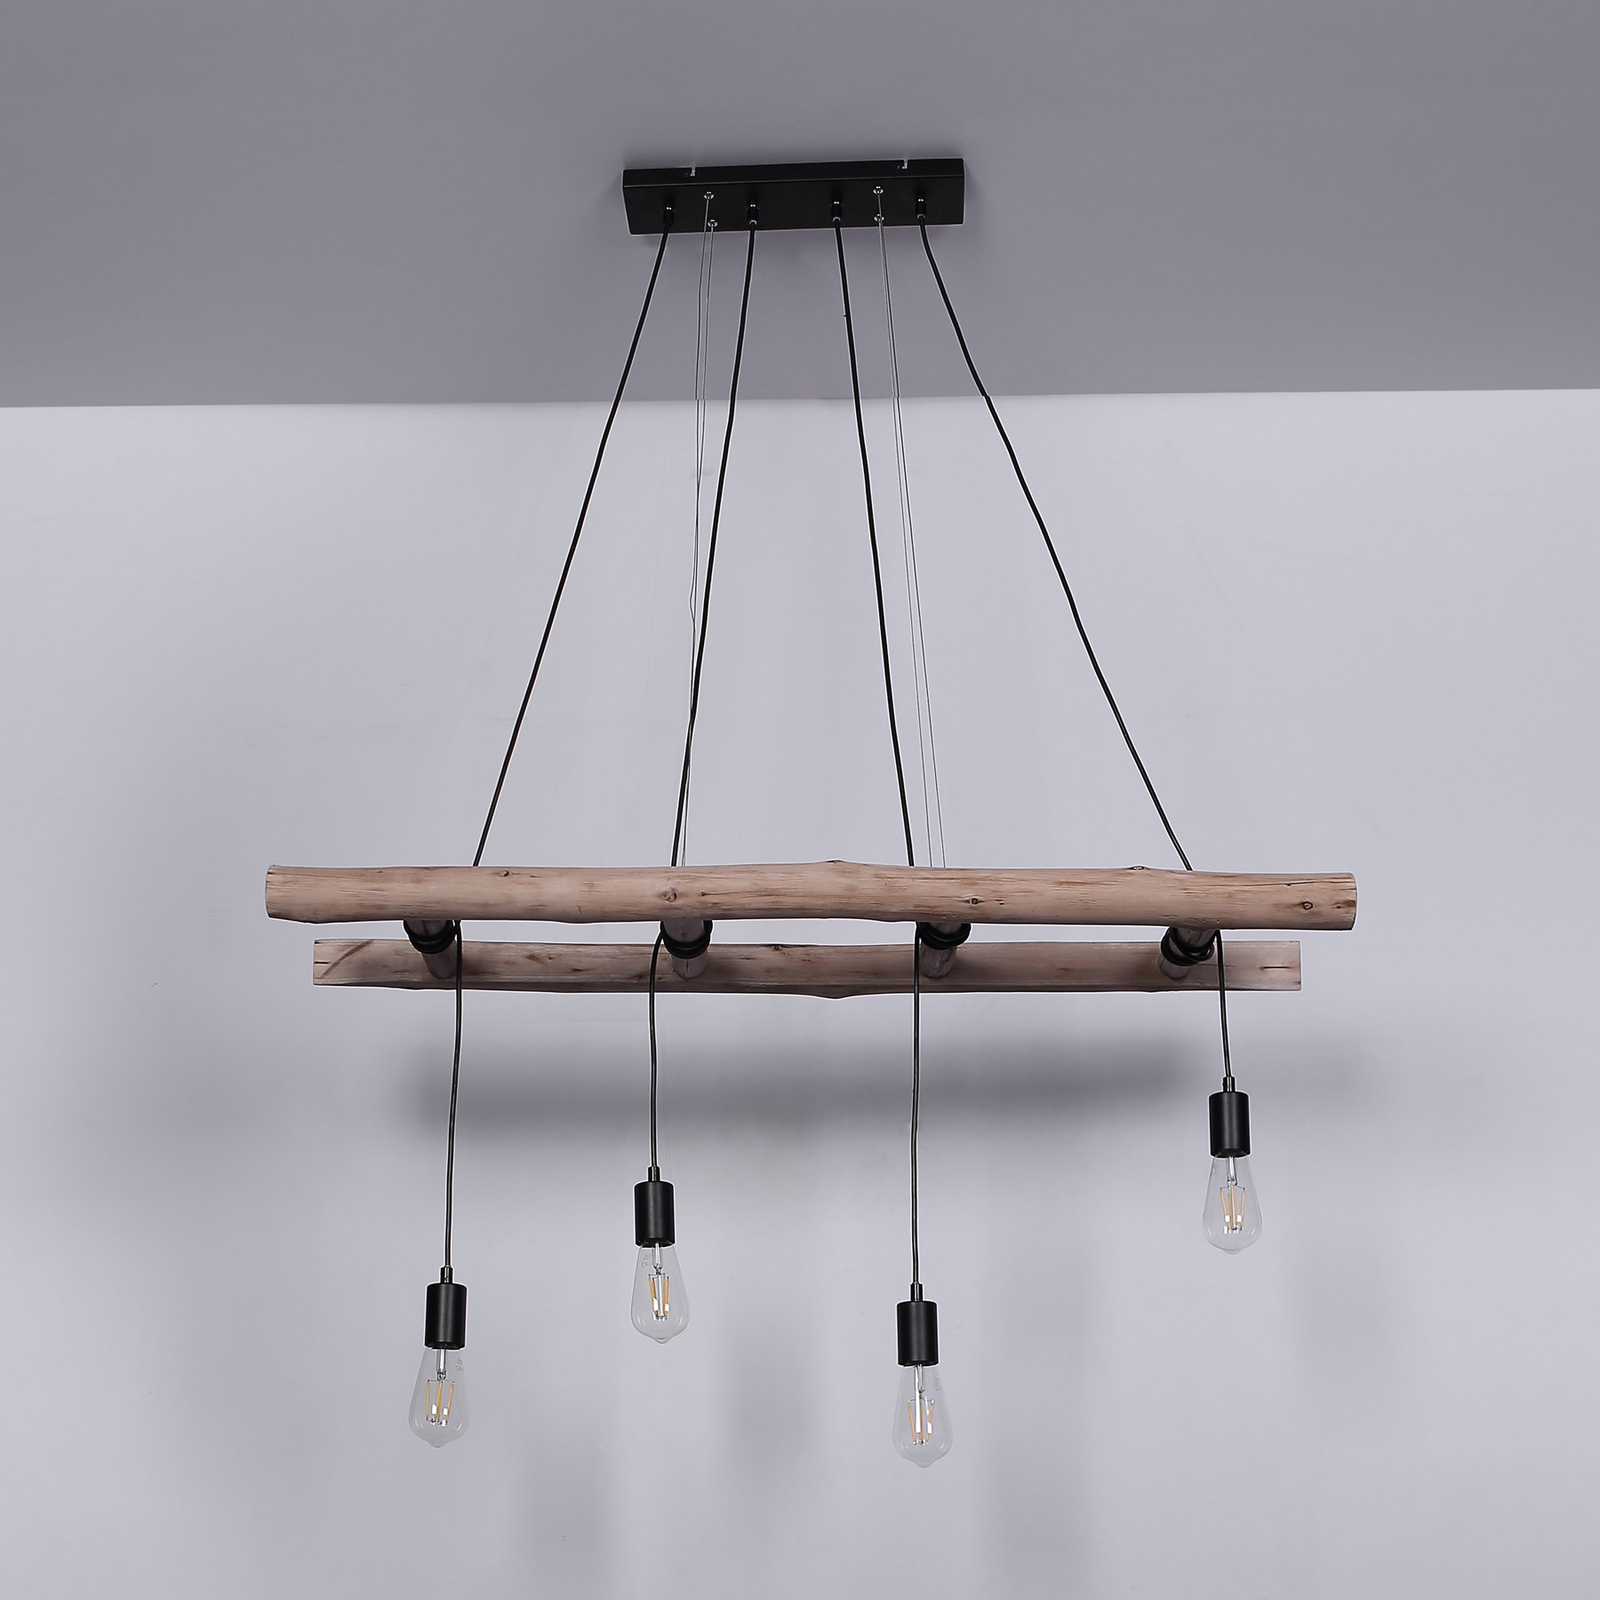 Irmgard hanging light made of wood